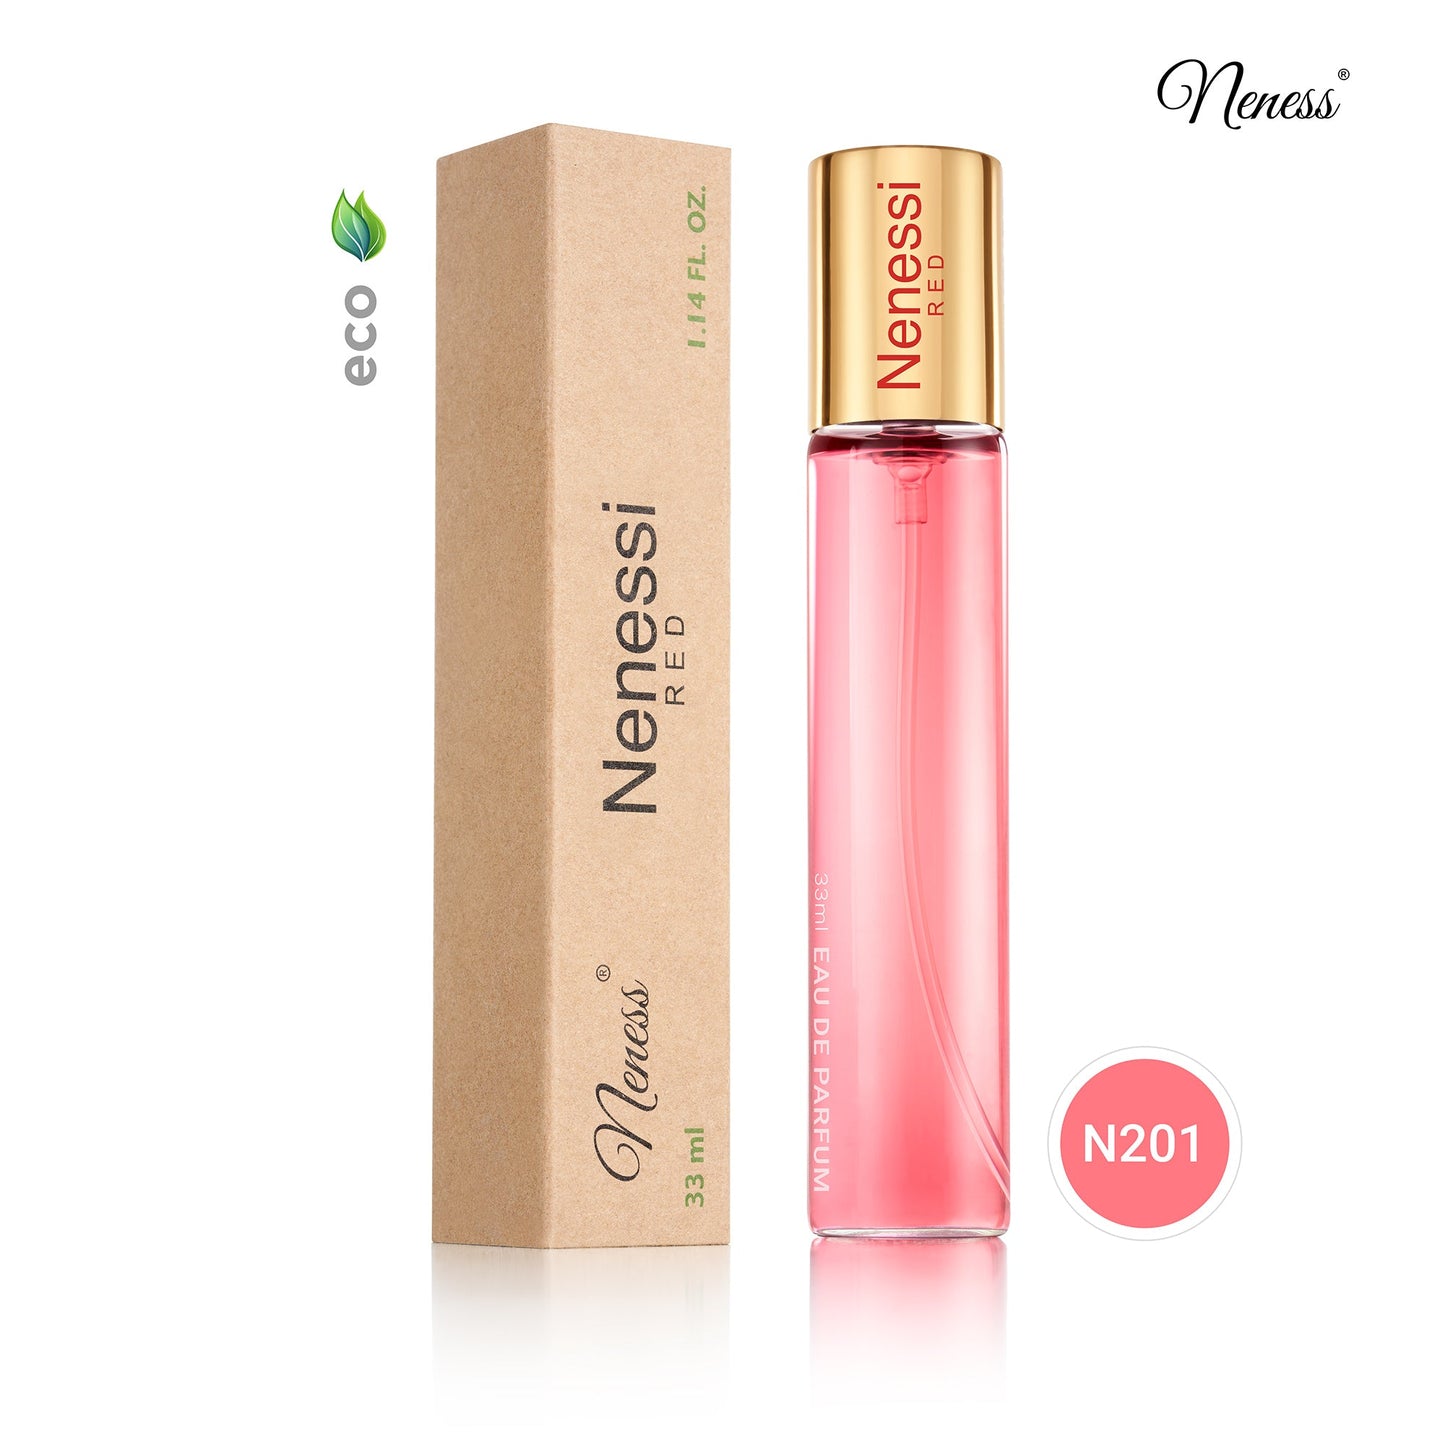 N201. Nenessi RED - 33 ml - Parfum Pour Femme